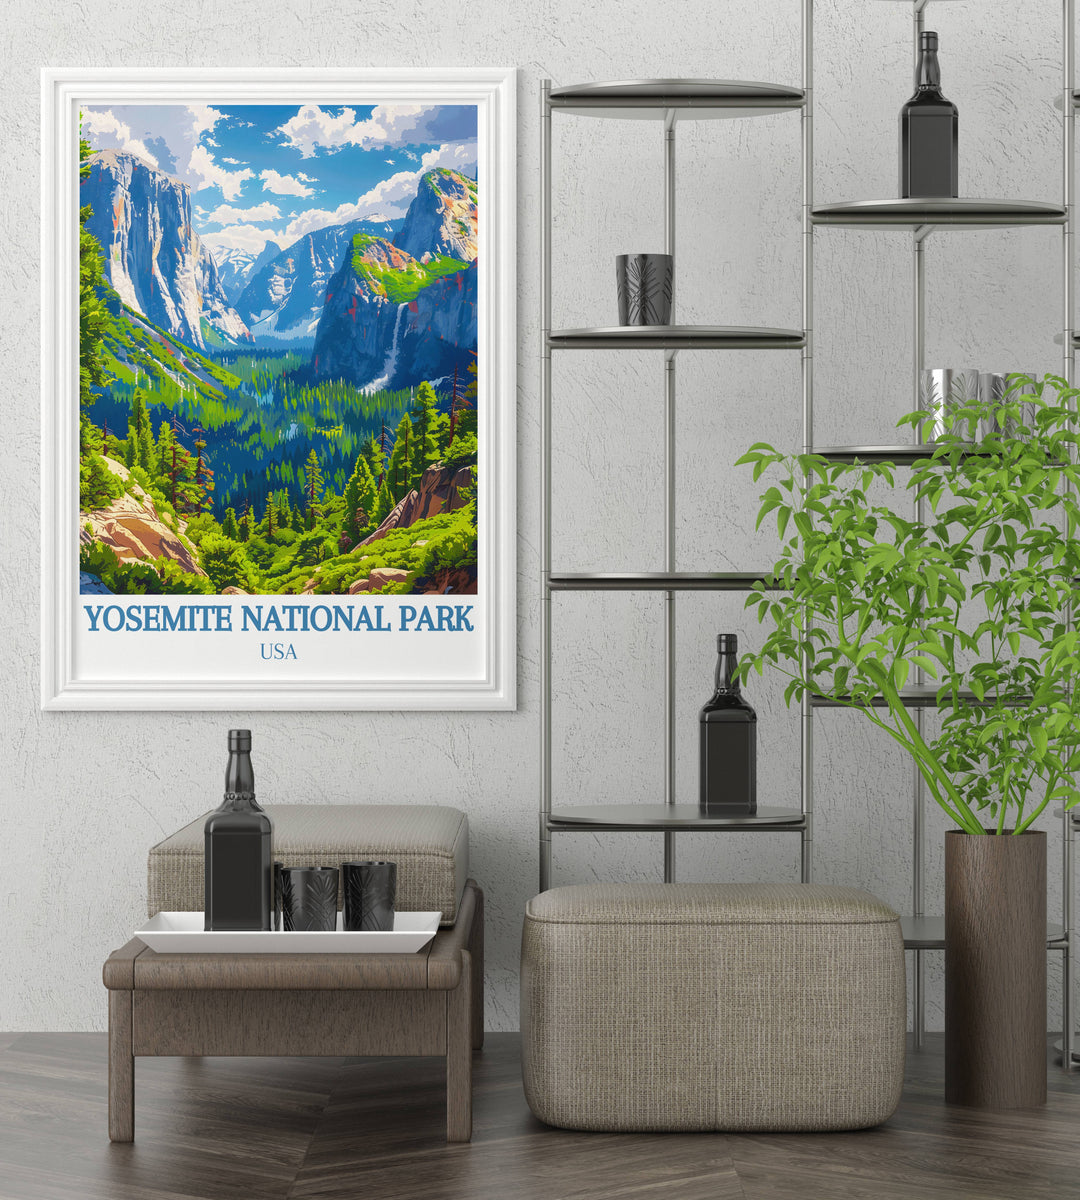 Yosemite National Park Art Prints - Yosemite National Park Wall Art - USA Home Decor